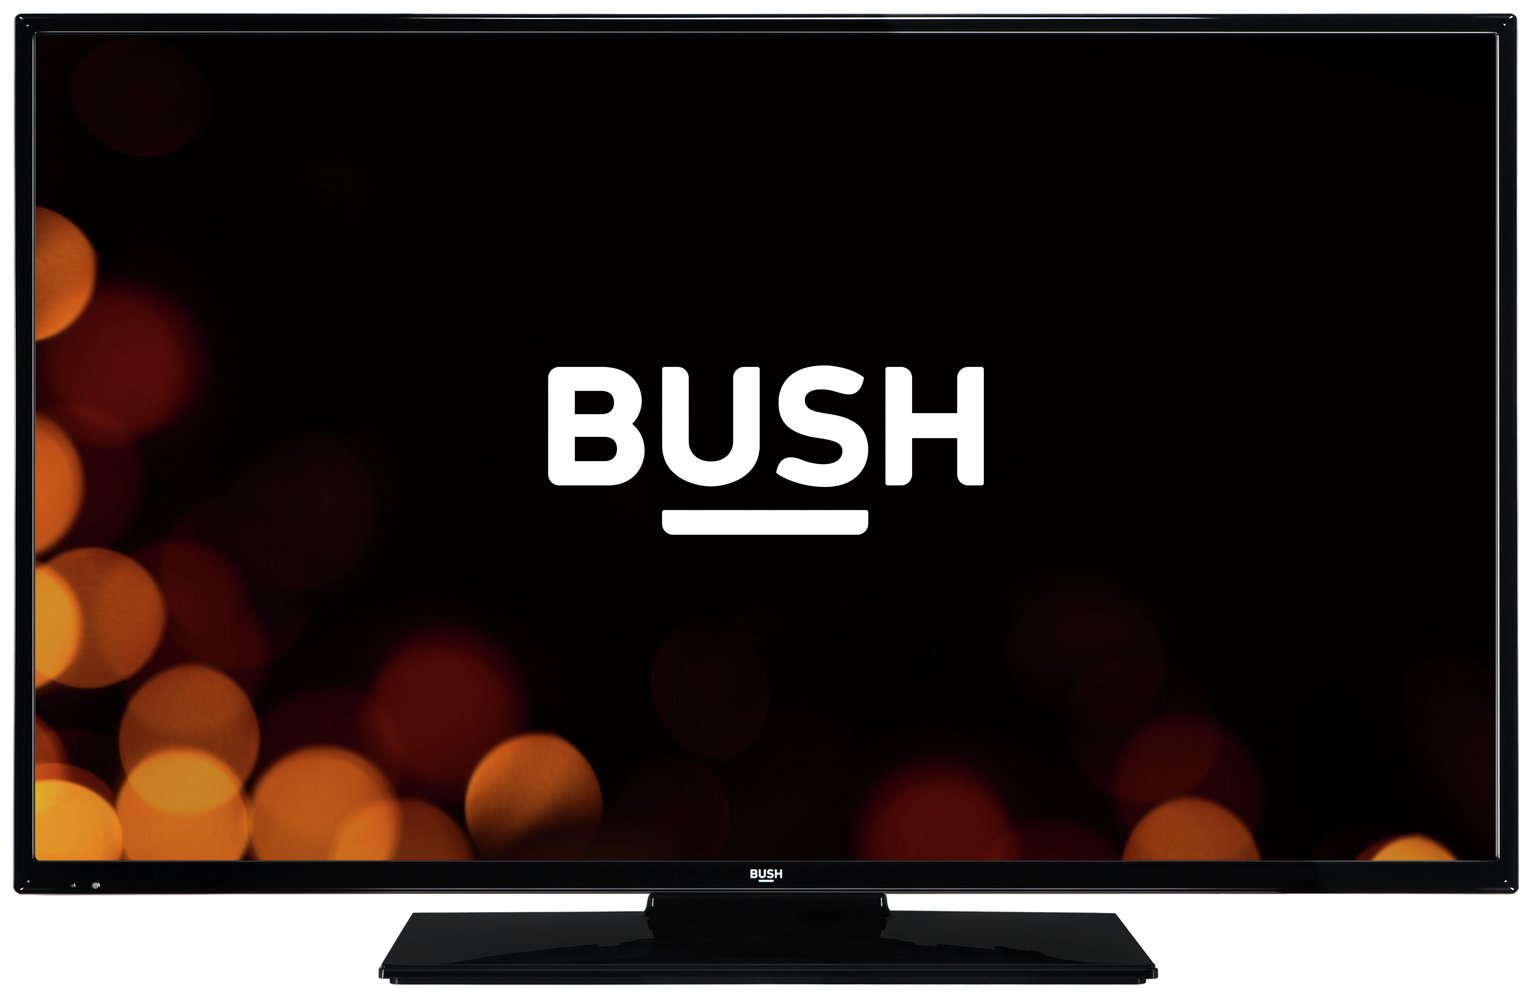 Bush 40 Inch Full HD TV Review thumbnail